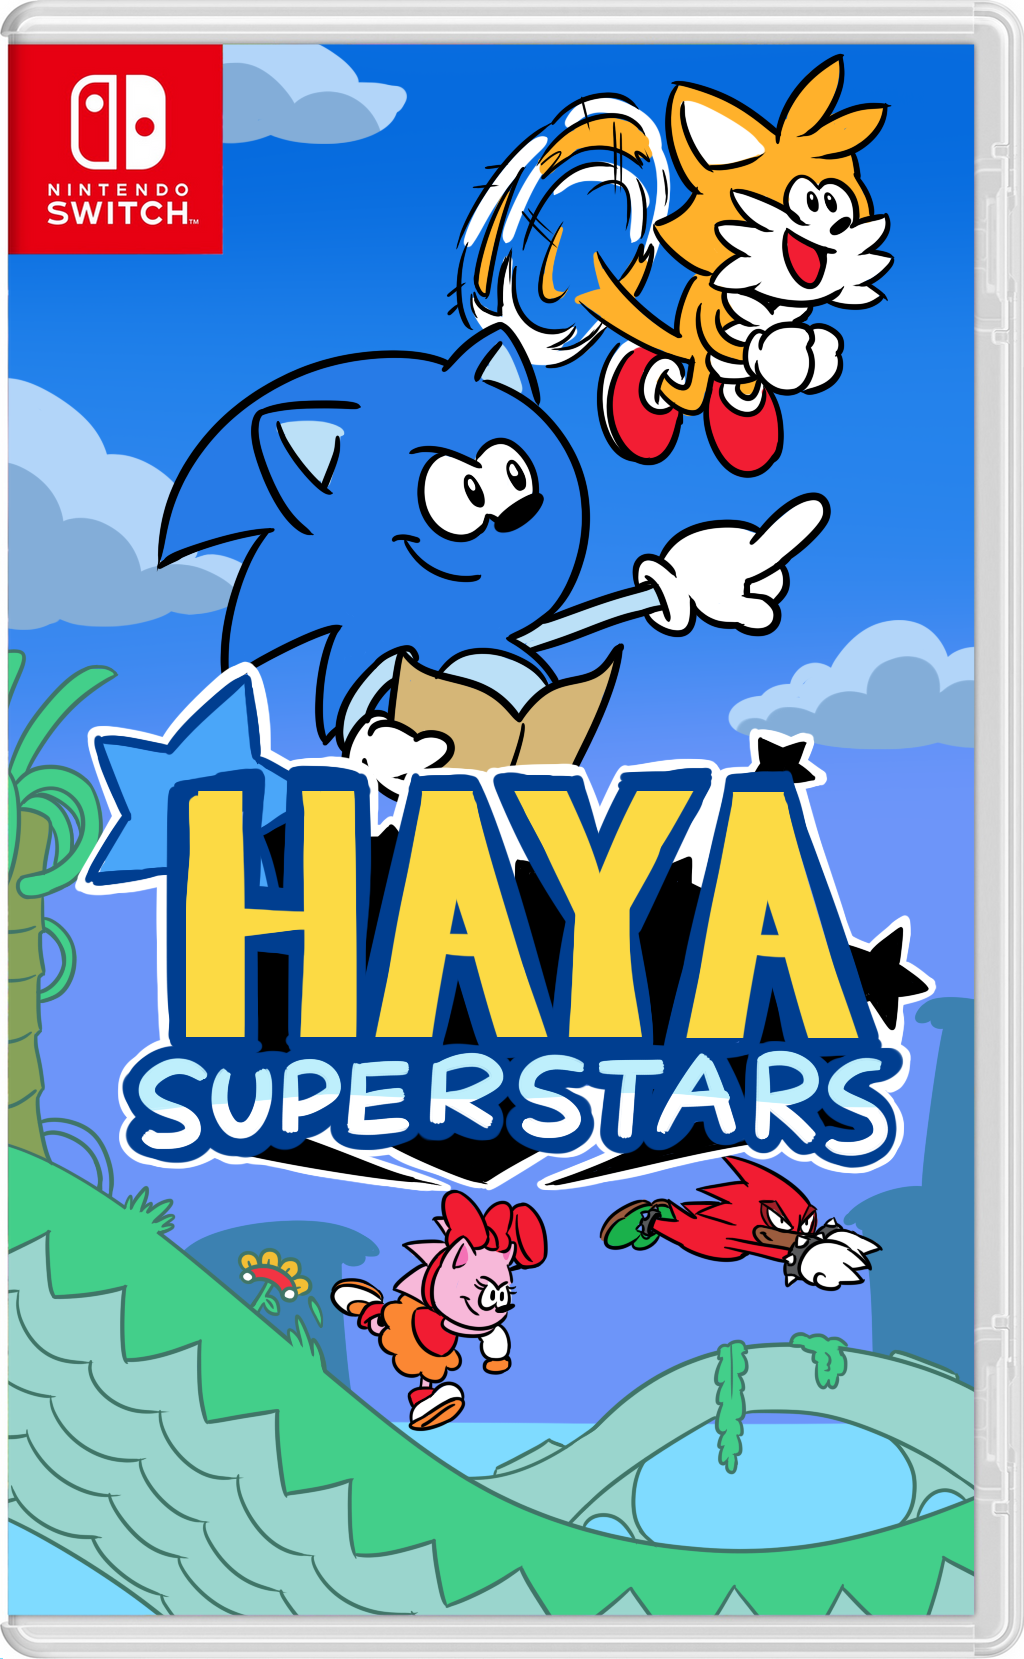 Haya Superstars